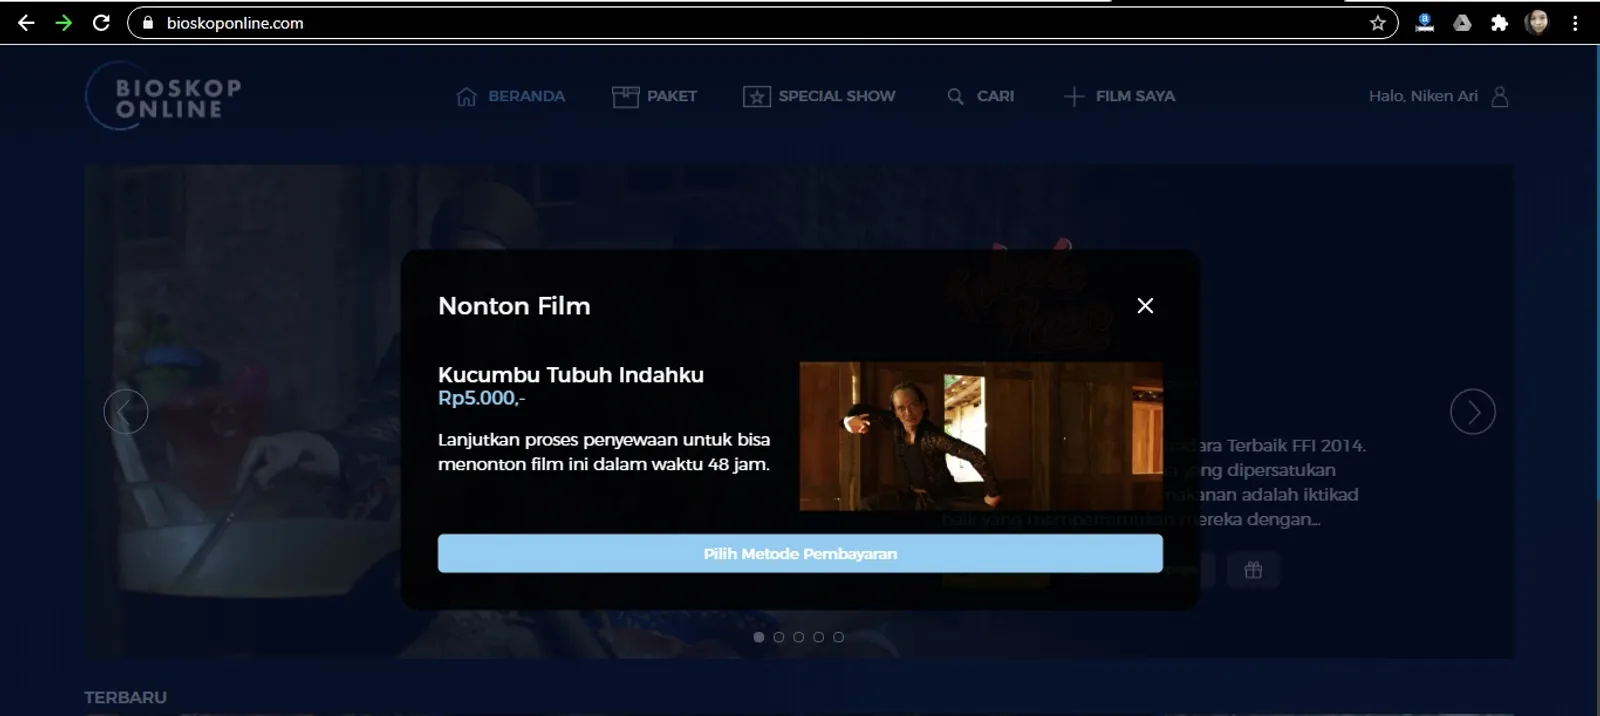 Nonton Online, Yuk! 6 Aplikasi Streaming Film Indonesia ini Legal Kok!